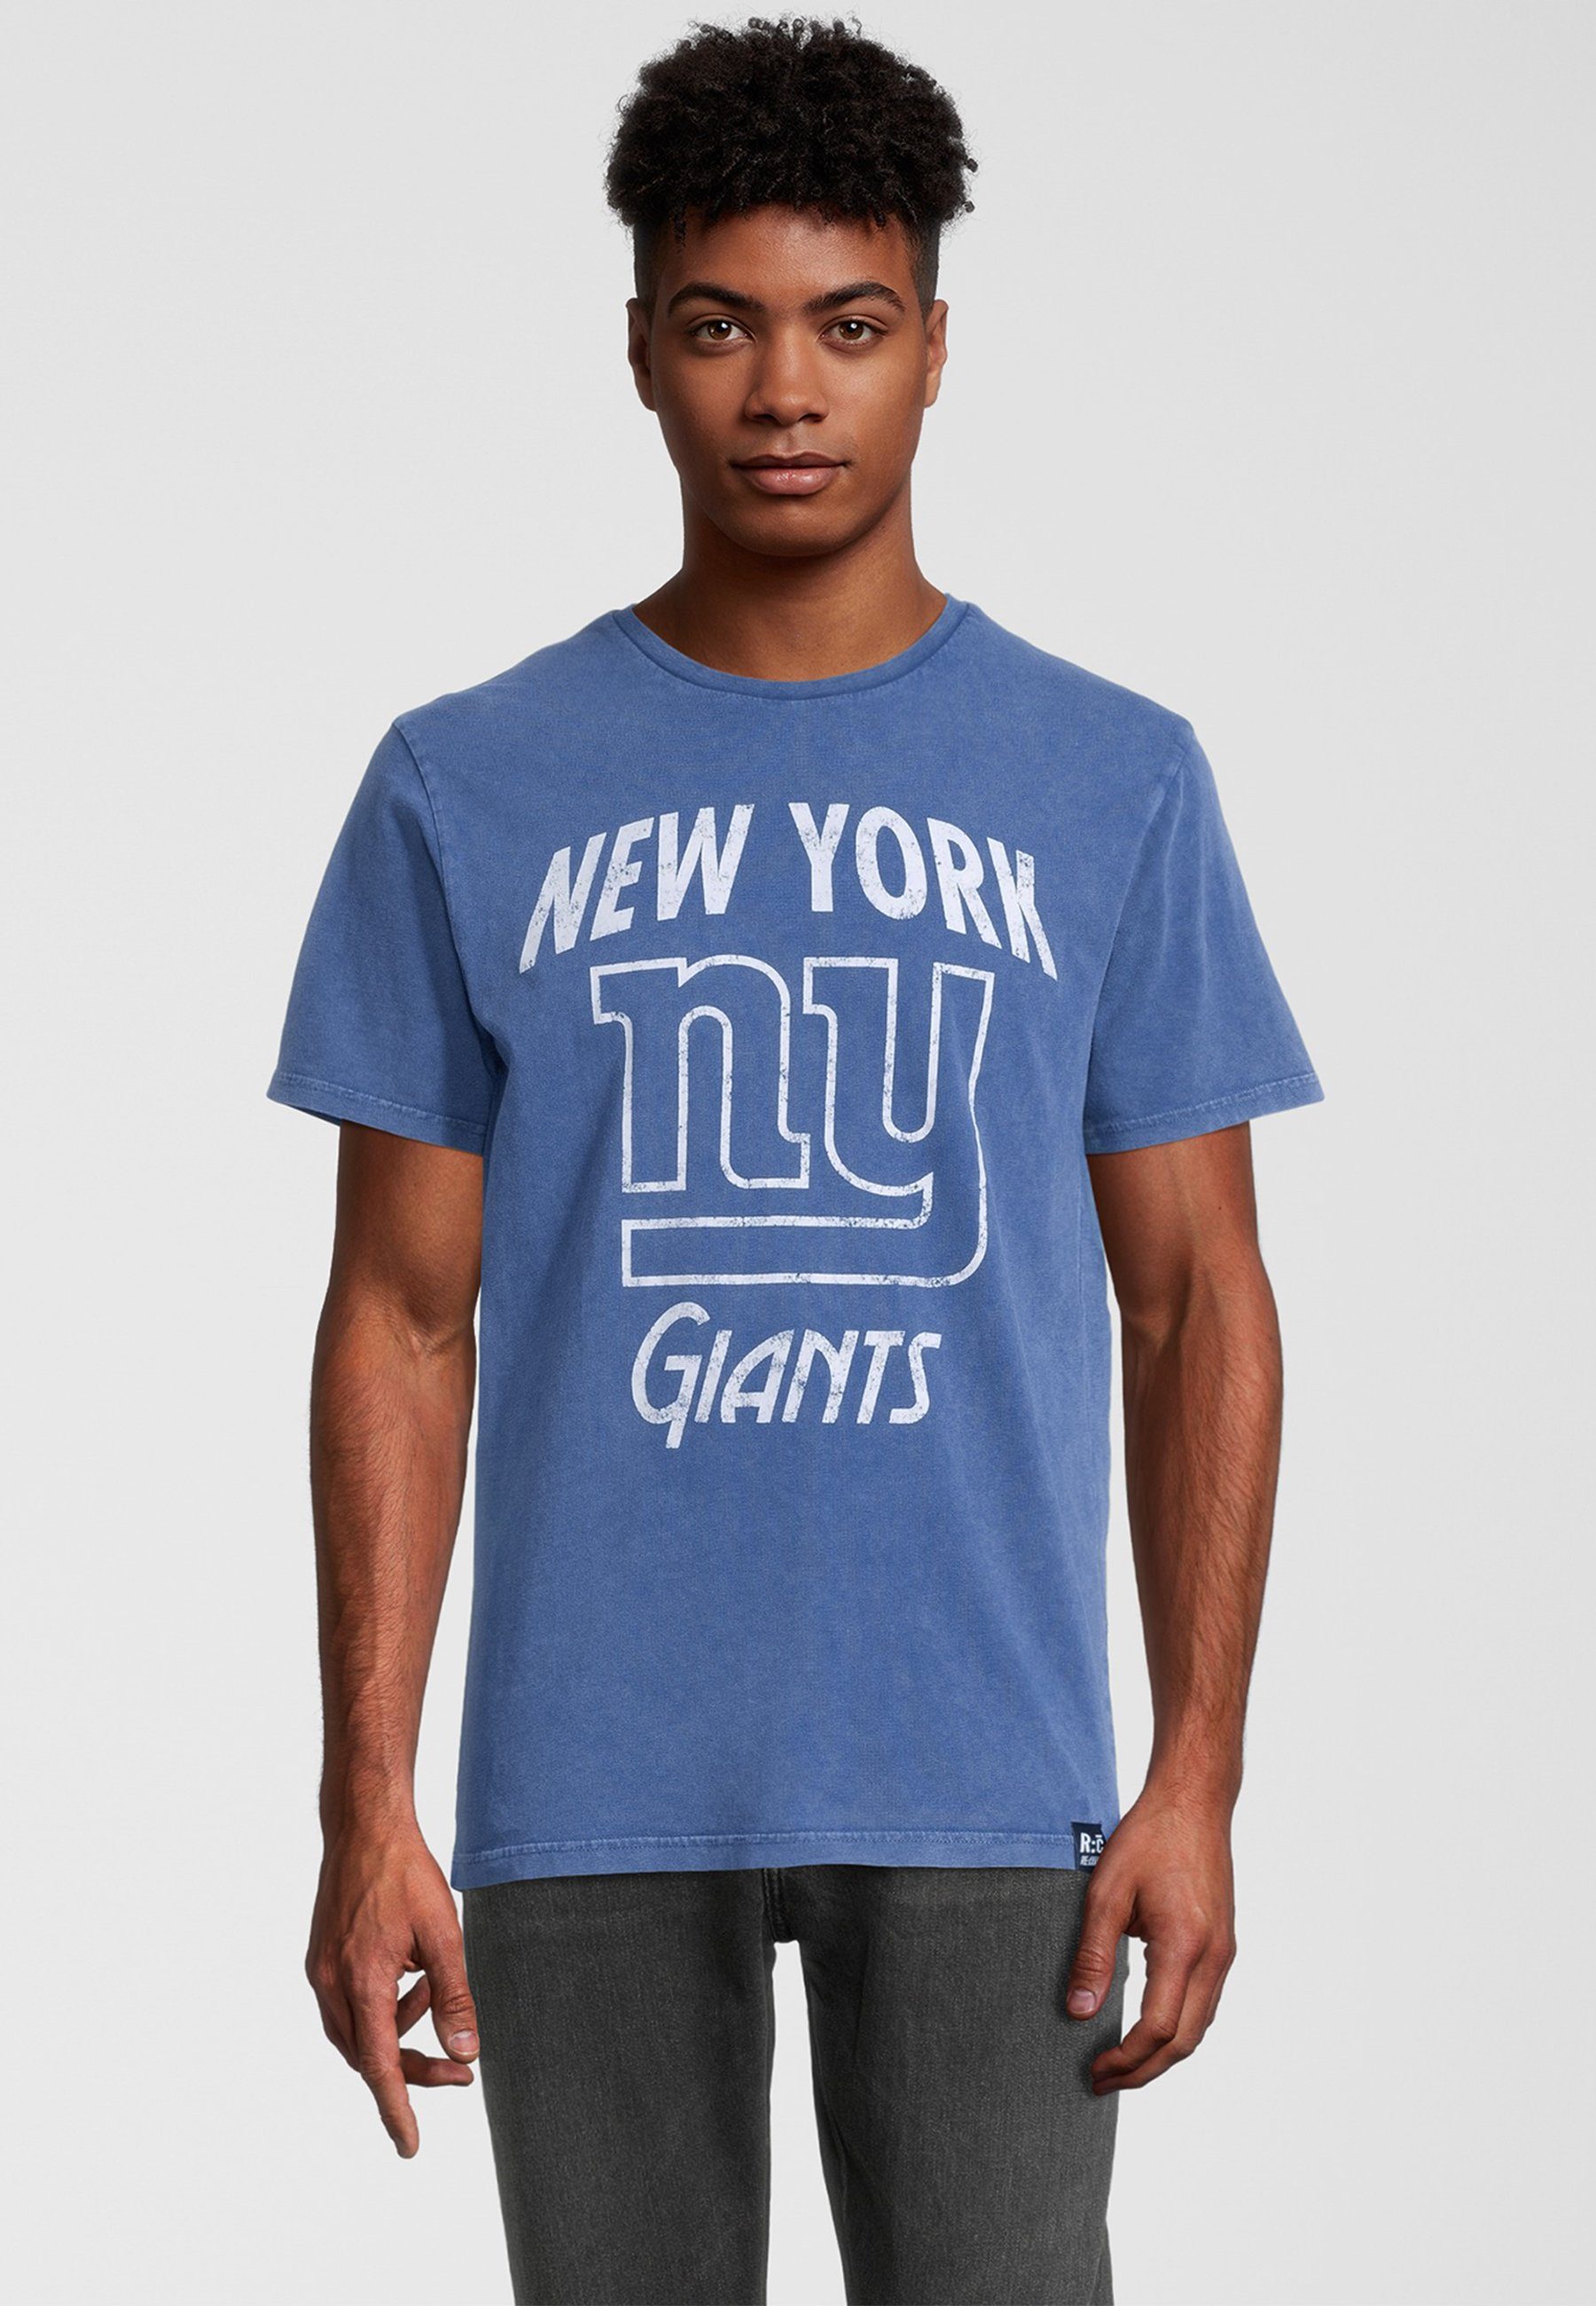 T-Shirt NFL Bio-Baumwolle Logo Recovered NY GOTS zertifizierte Giants